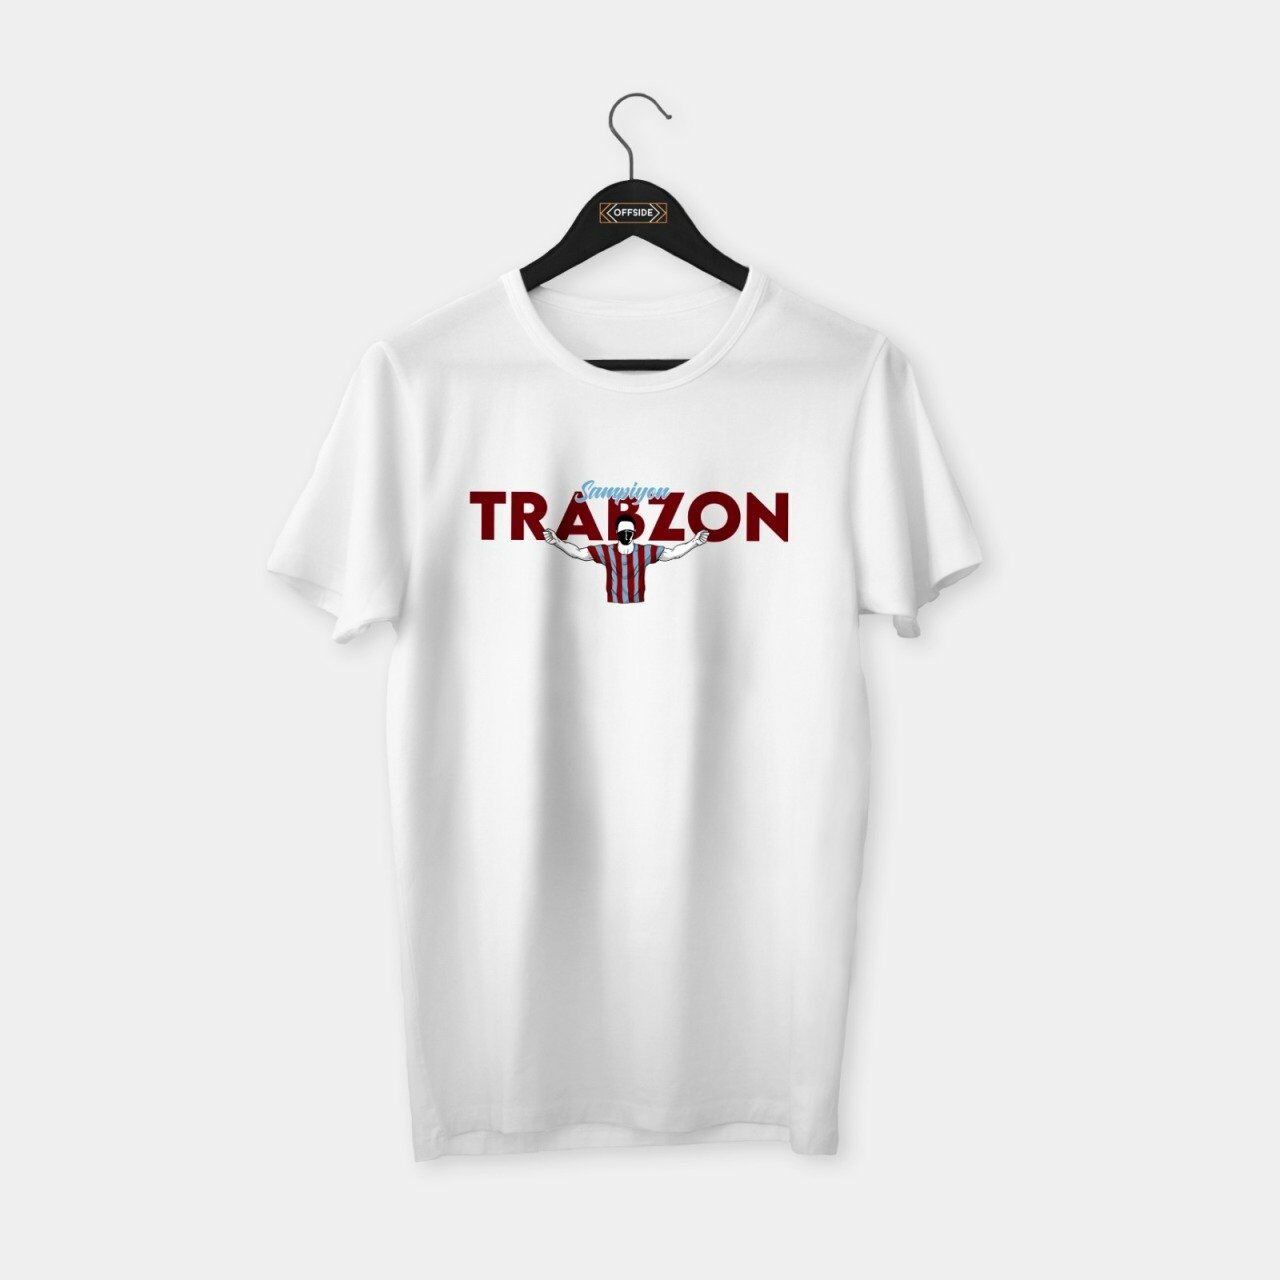 Şampiyon Trabzon 'Taraftar' T-shirt